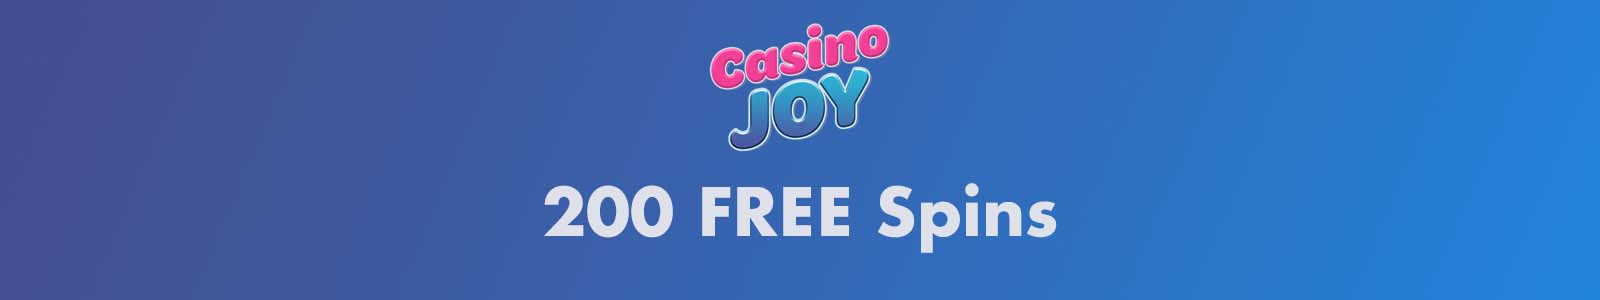 free spins no deposit new casino uk